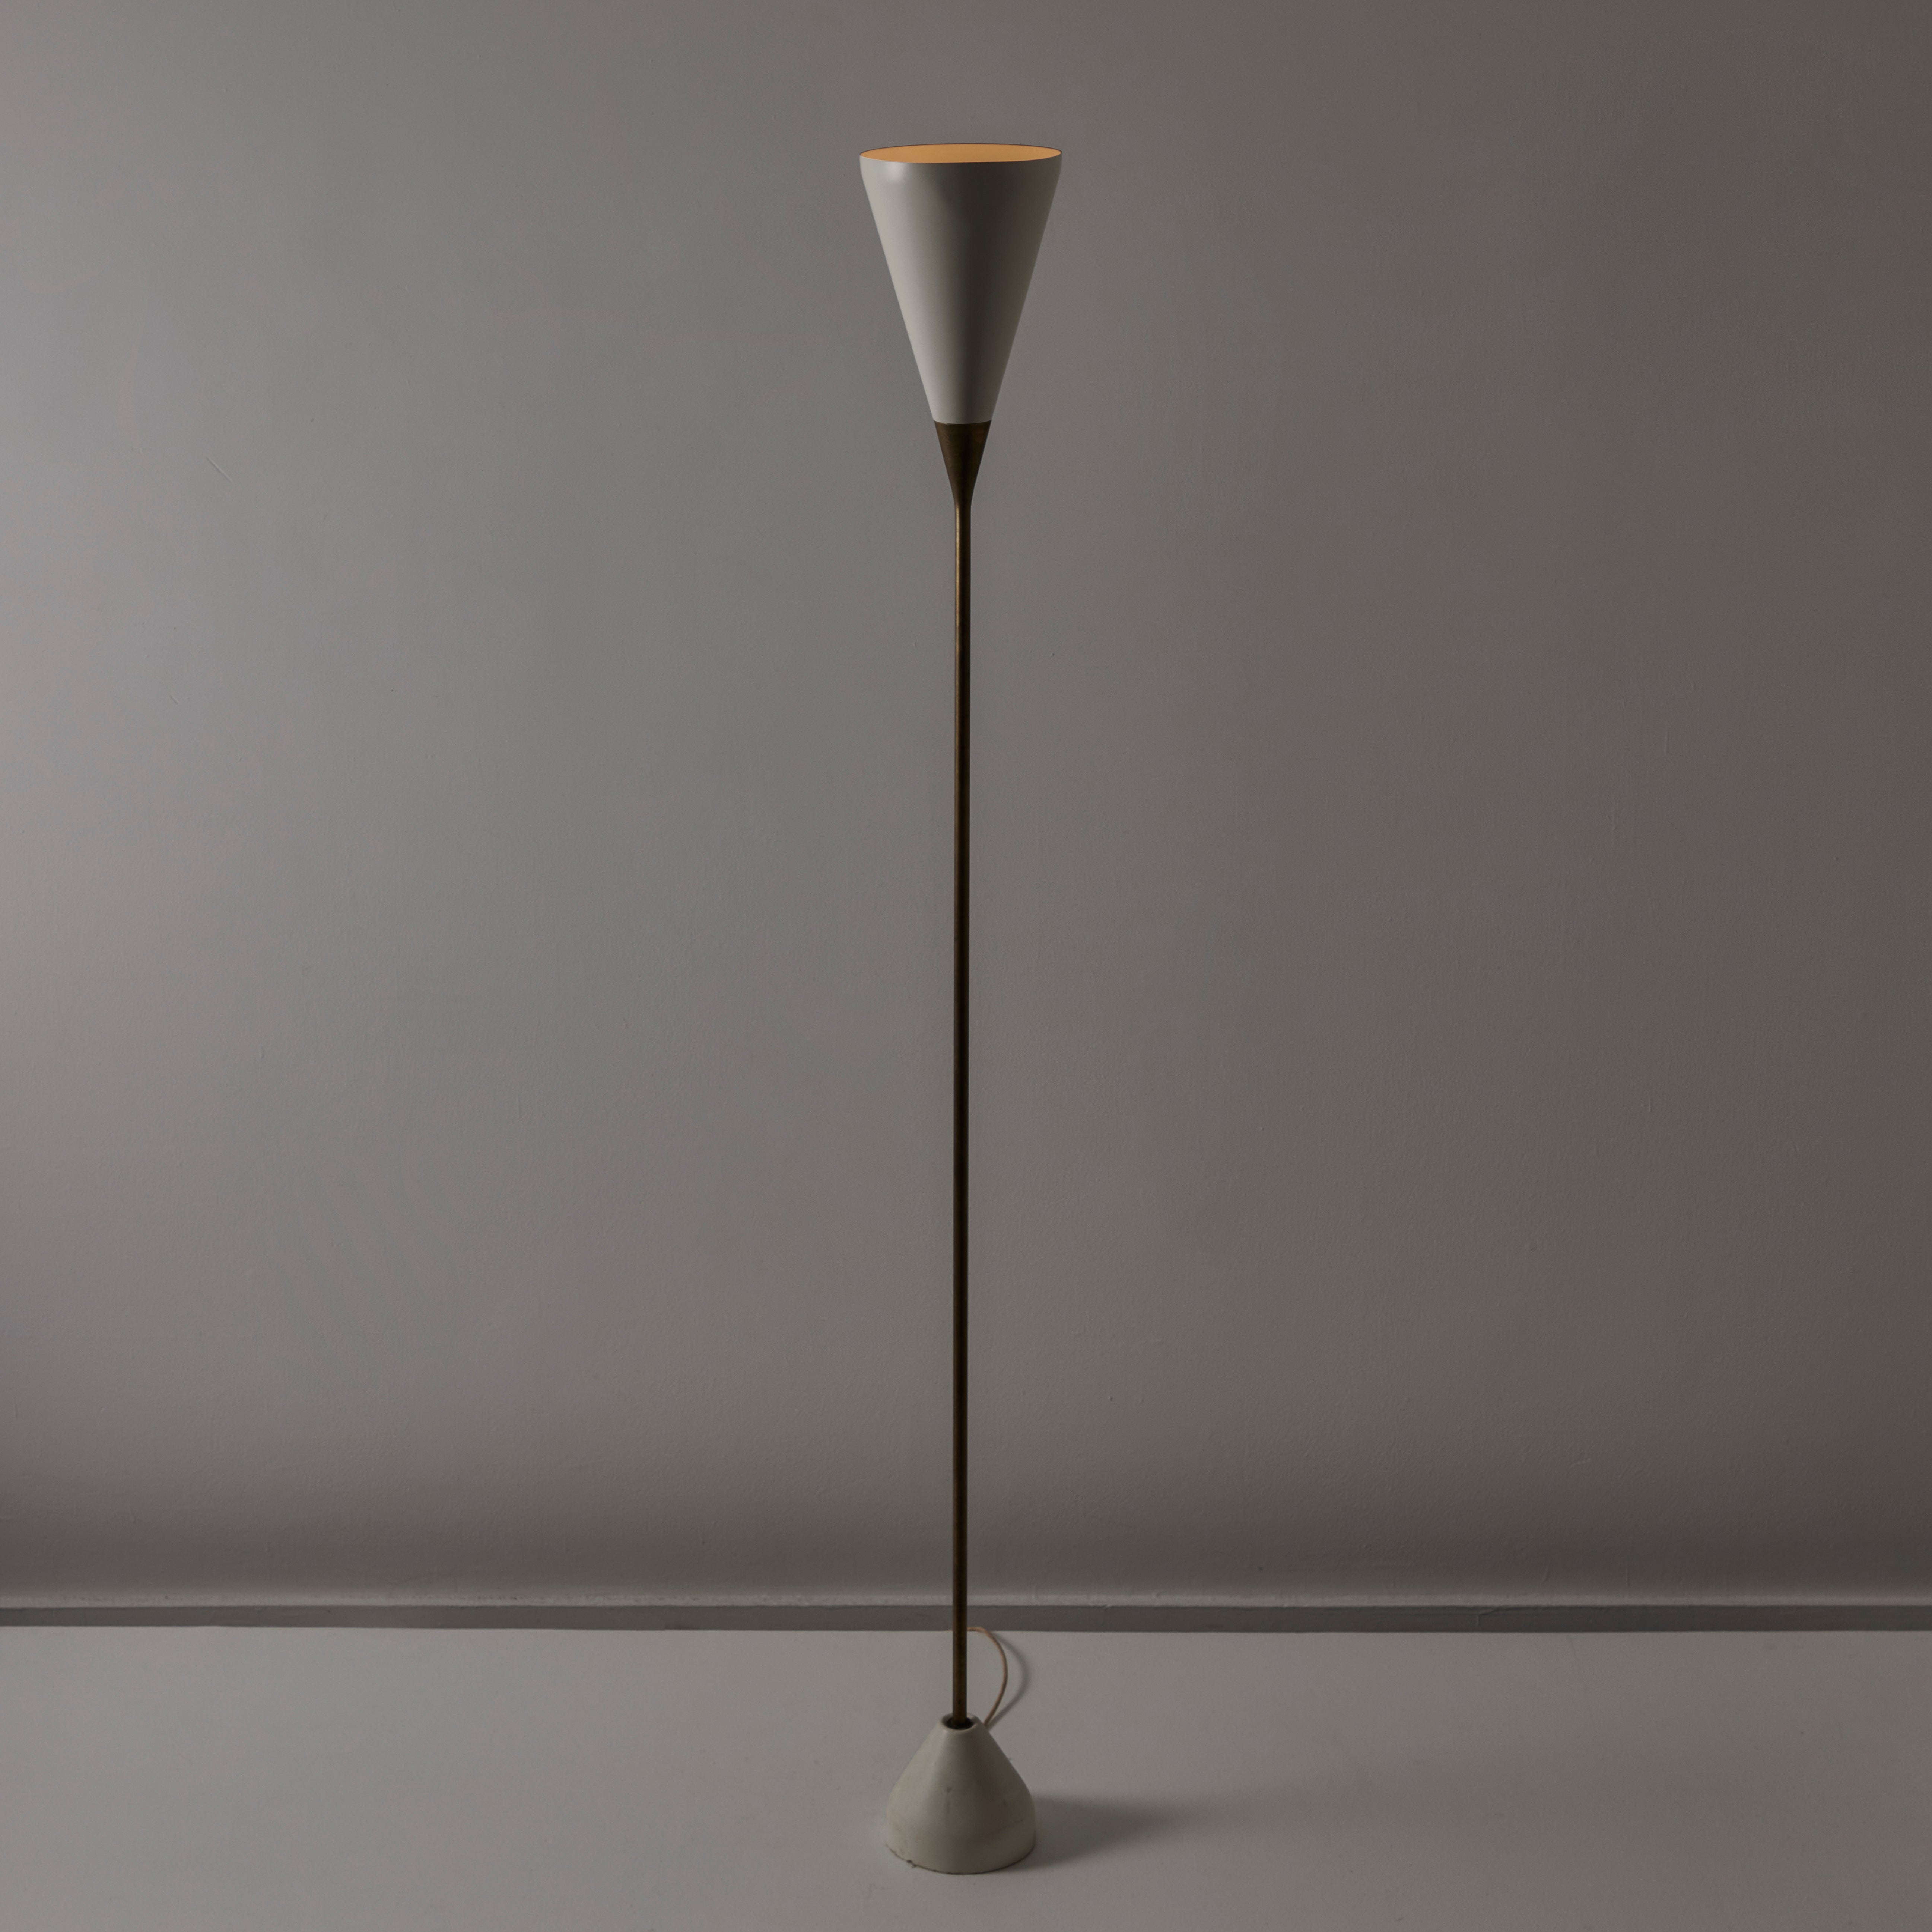 Model No. B-30 Floor Lamp by Franco Buzzi for Oluce